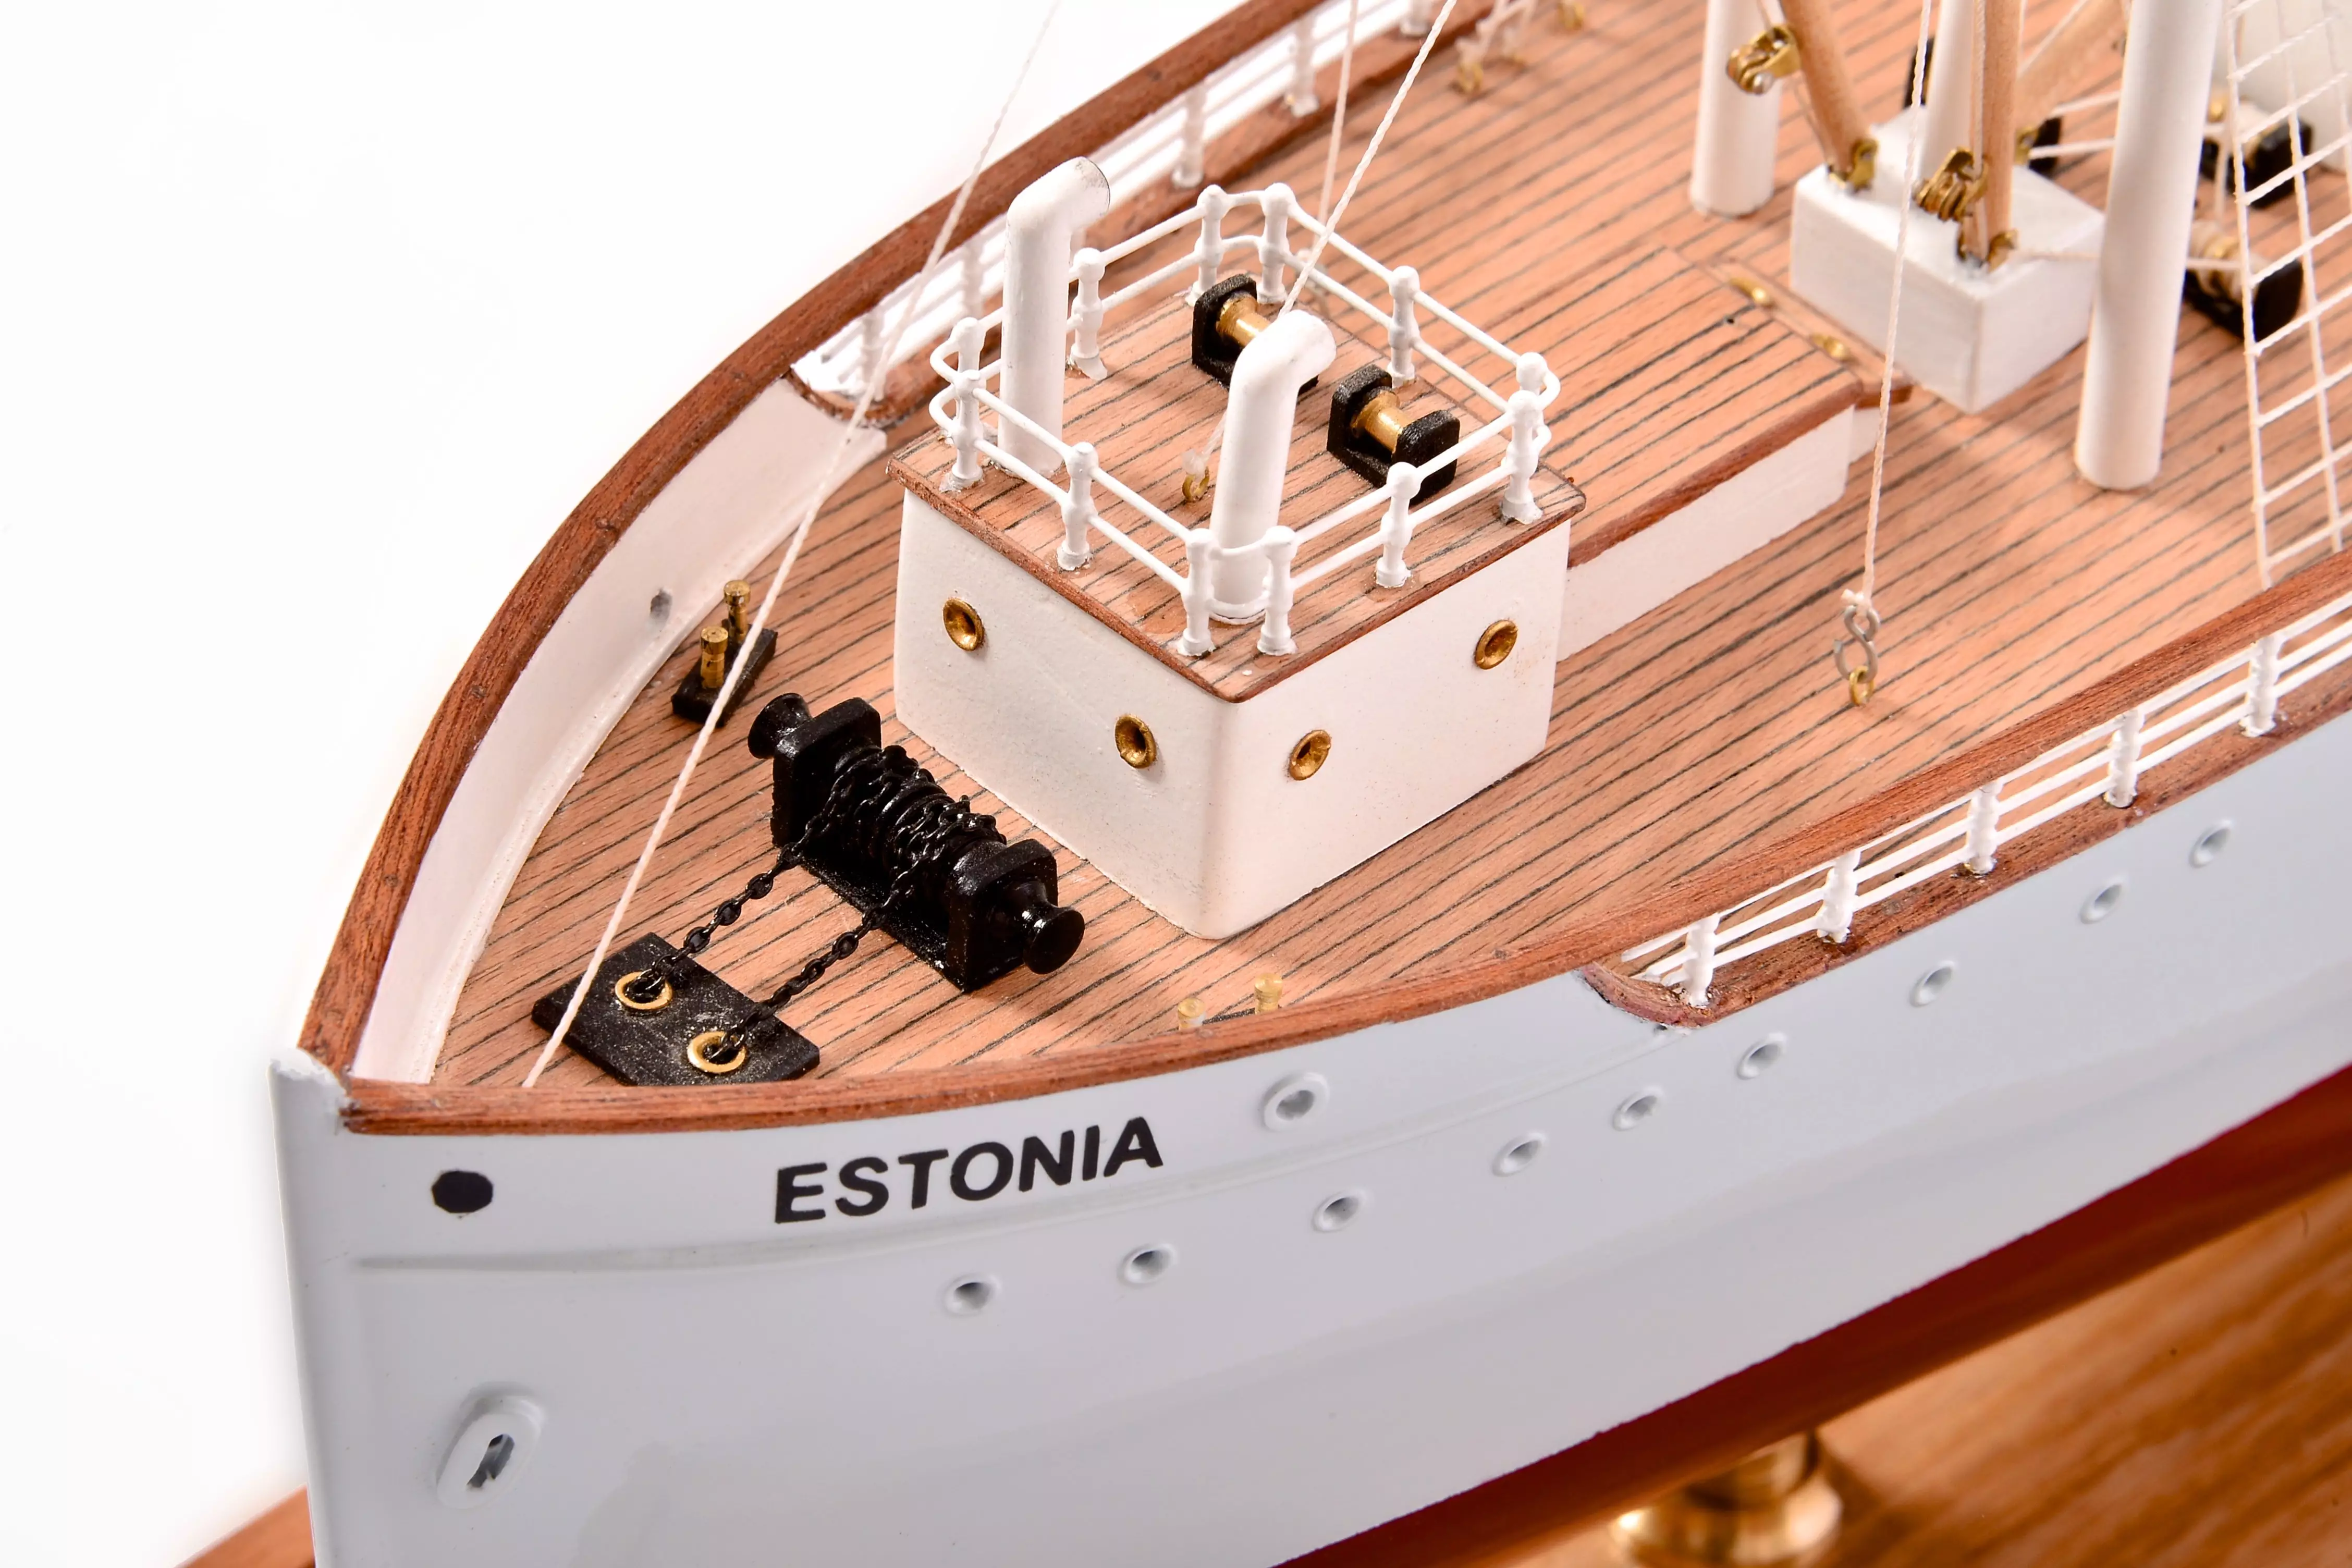 SS Estonia Passenger Ship Model